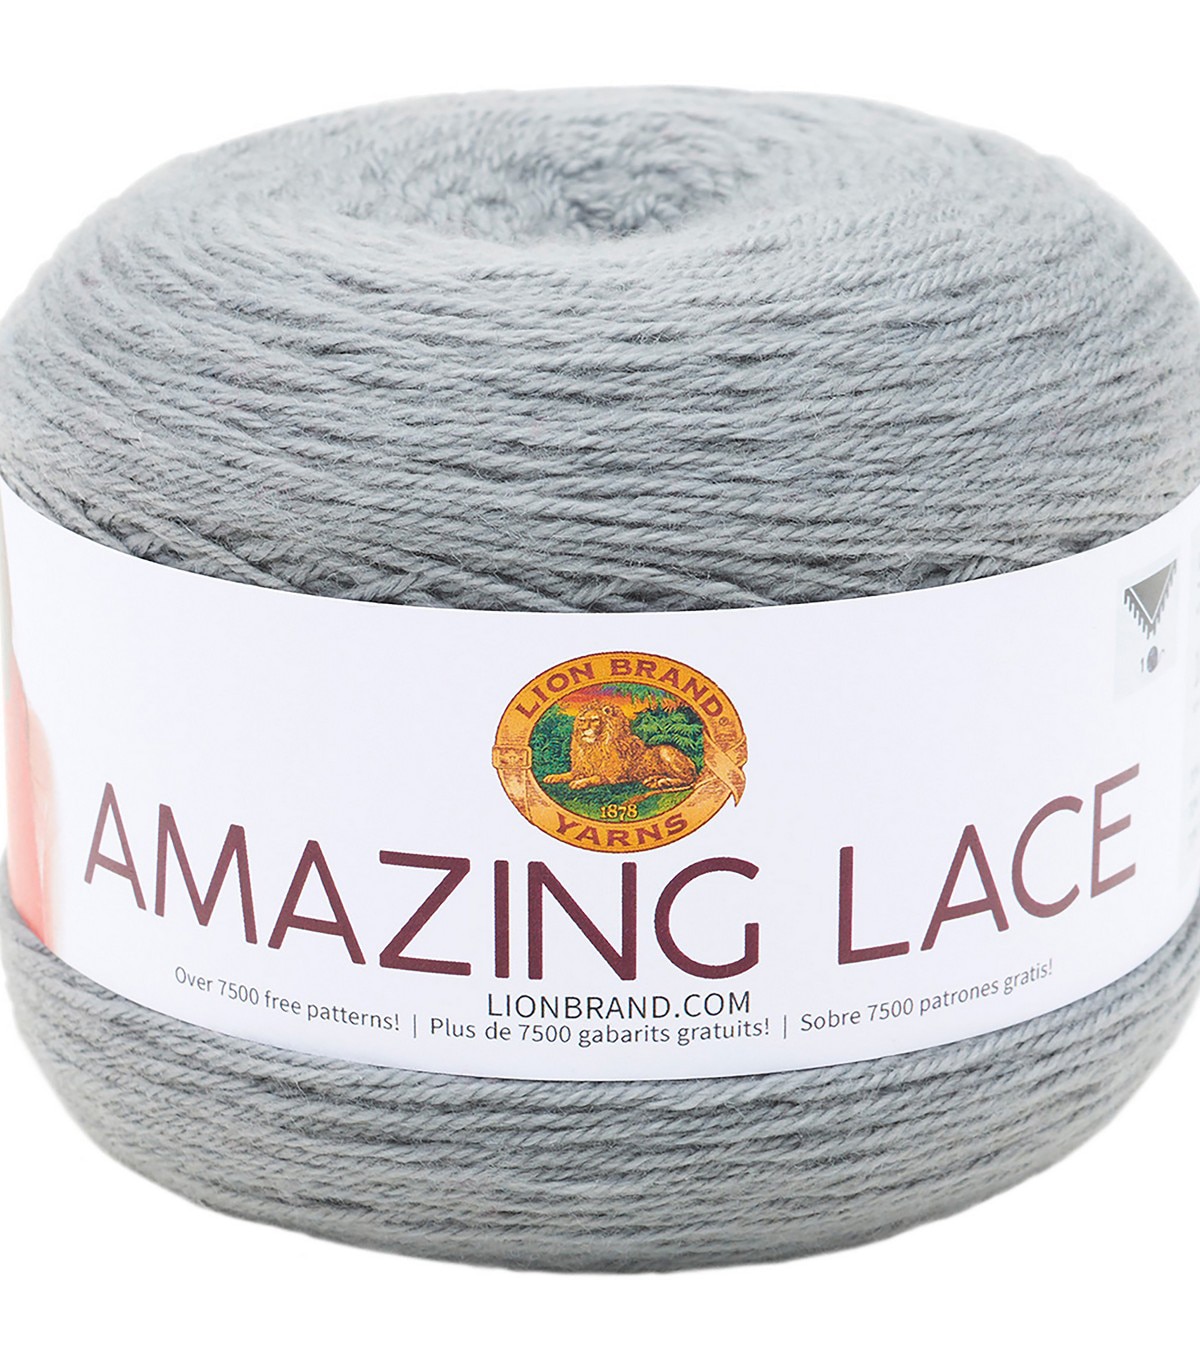 lace yarn